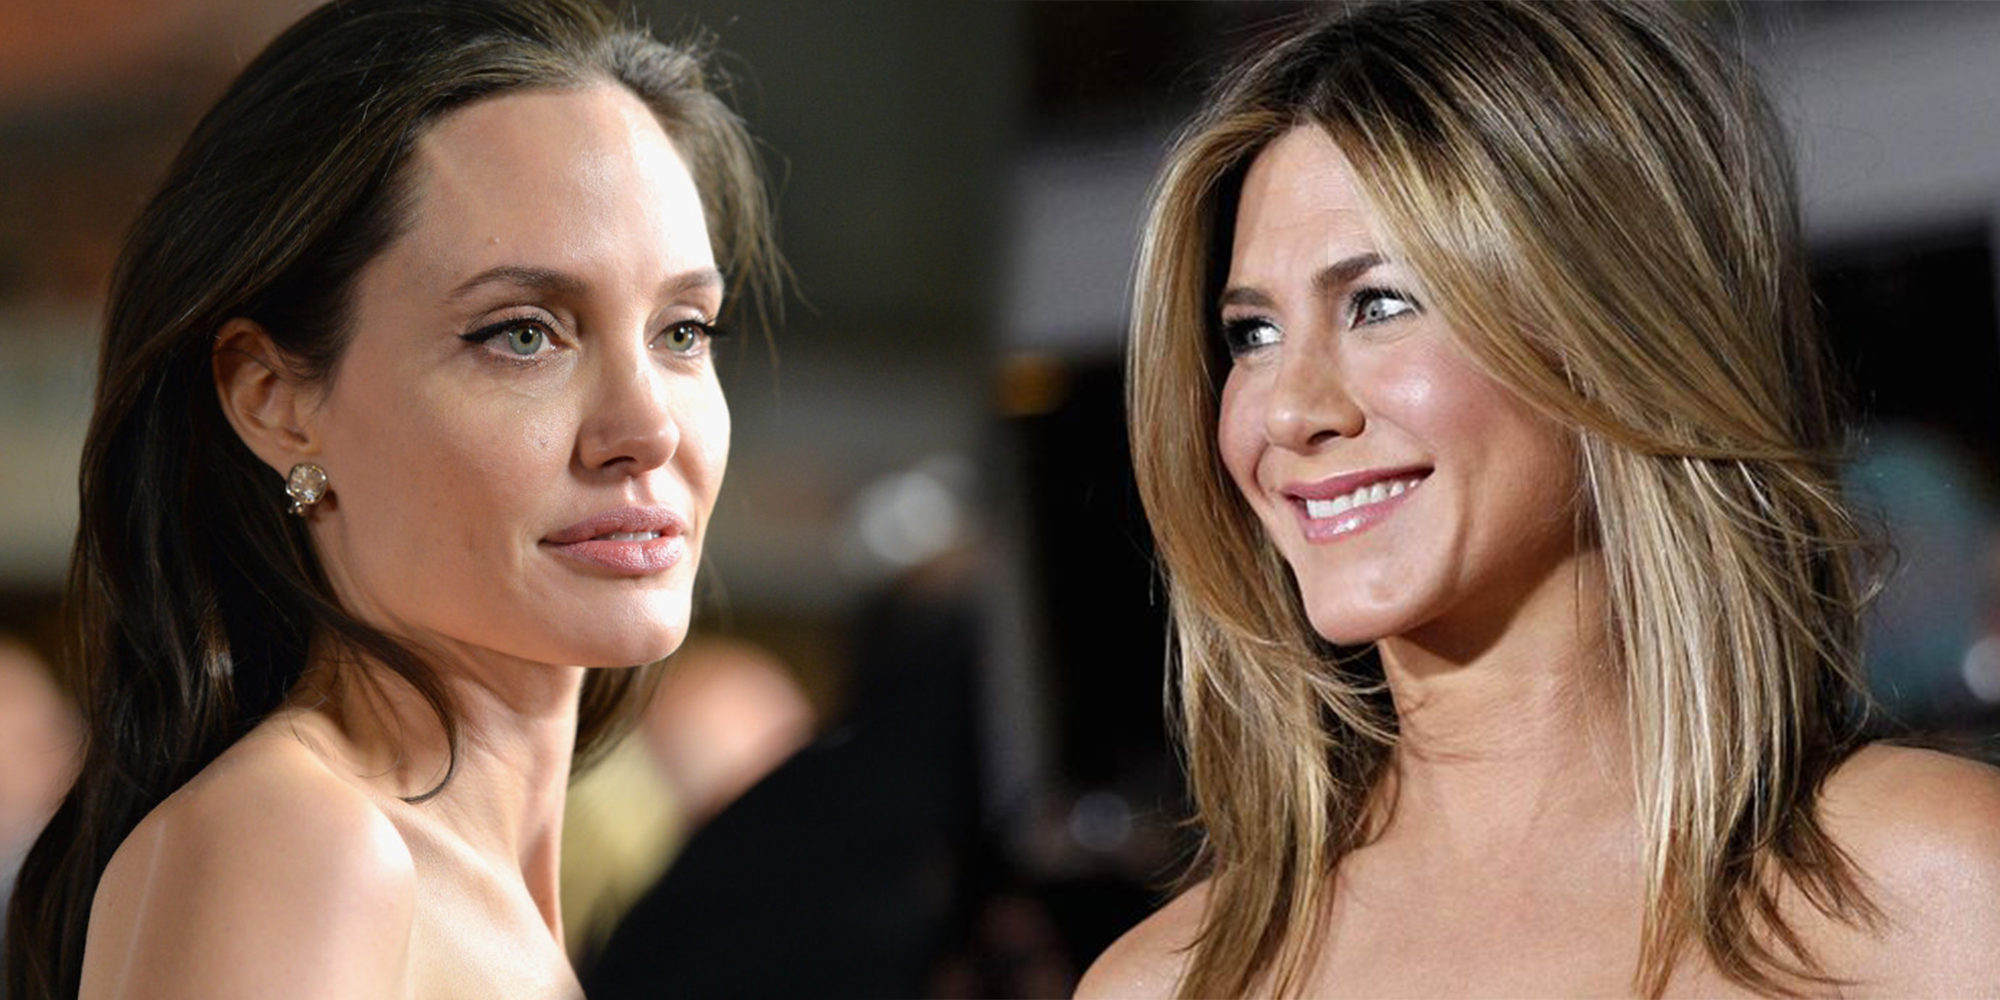 Enemigas Íntimas: La histórica enemistad entre Jennifer Aniston y Angelina Jolie causada por Brad Pitt